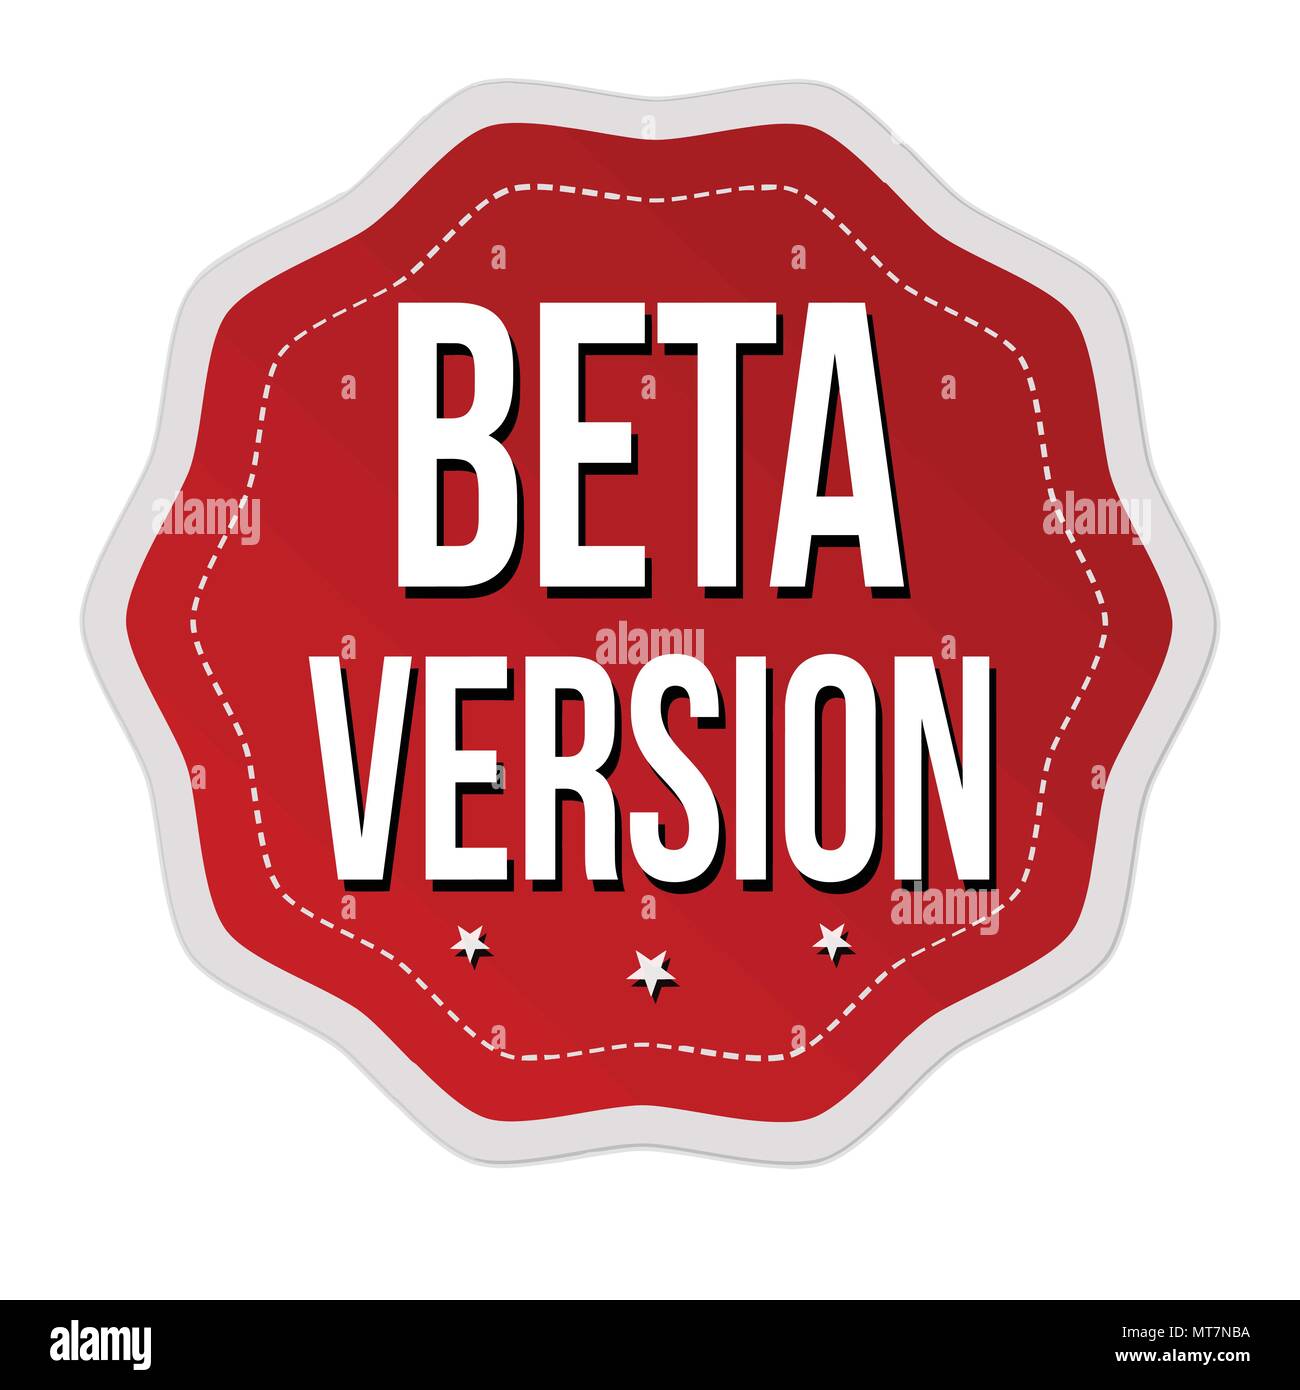 Beta version label or sticker on white background, vector illustration Stock Vector